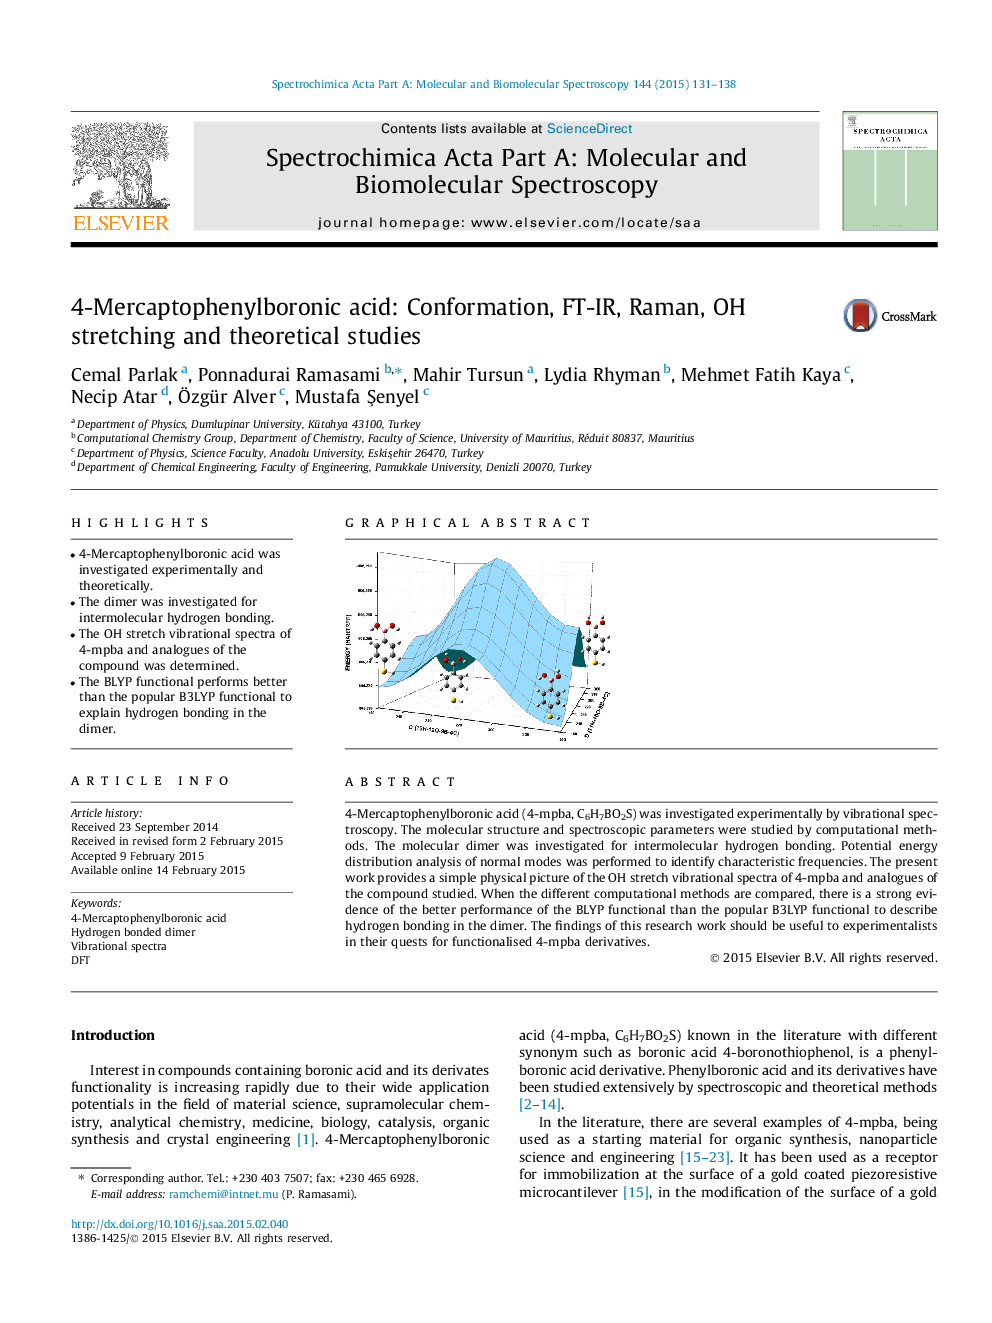 4-Mercaptophenylboronic acid: Conformation, FT-IR, Raman, OH stretching and theoretical studies